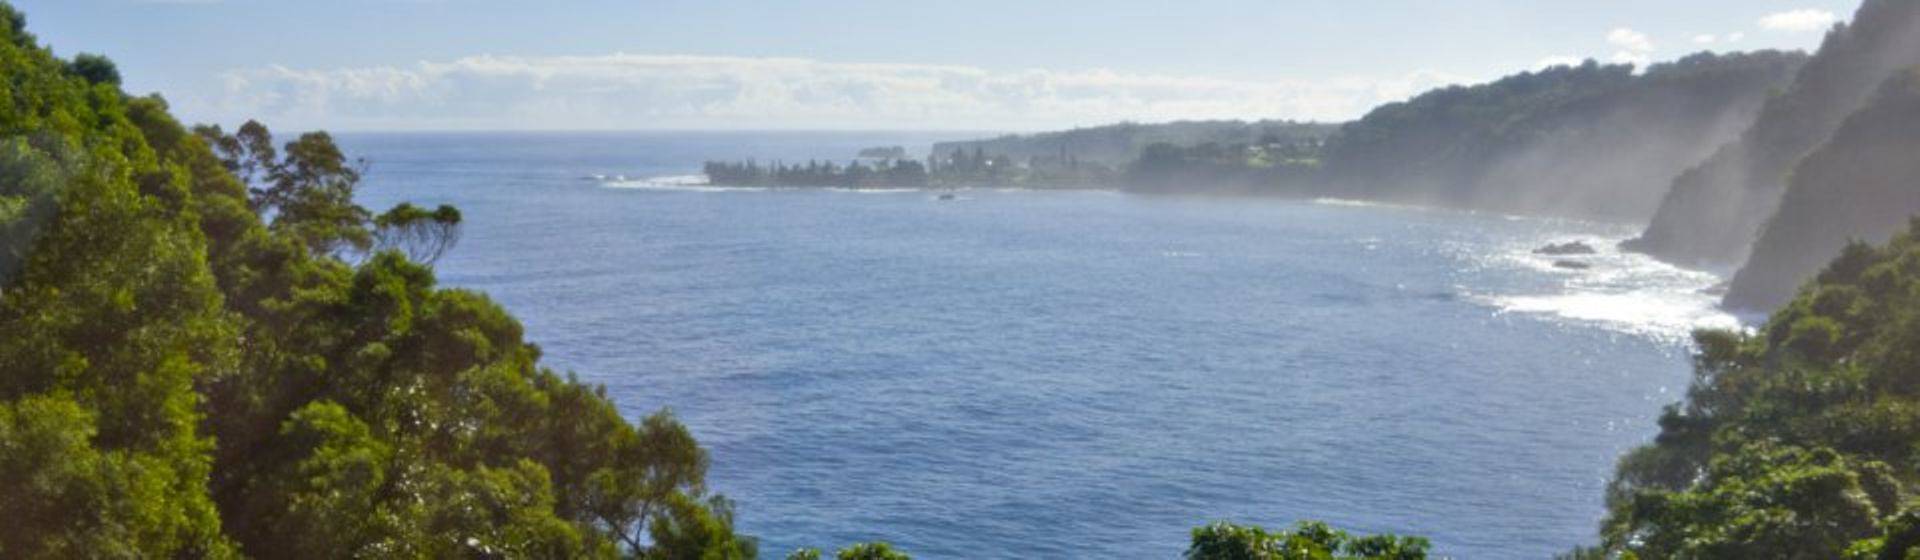 Holidays to Maui Image